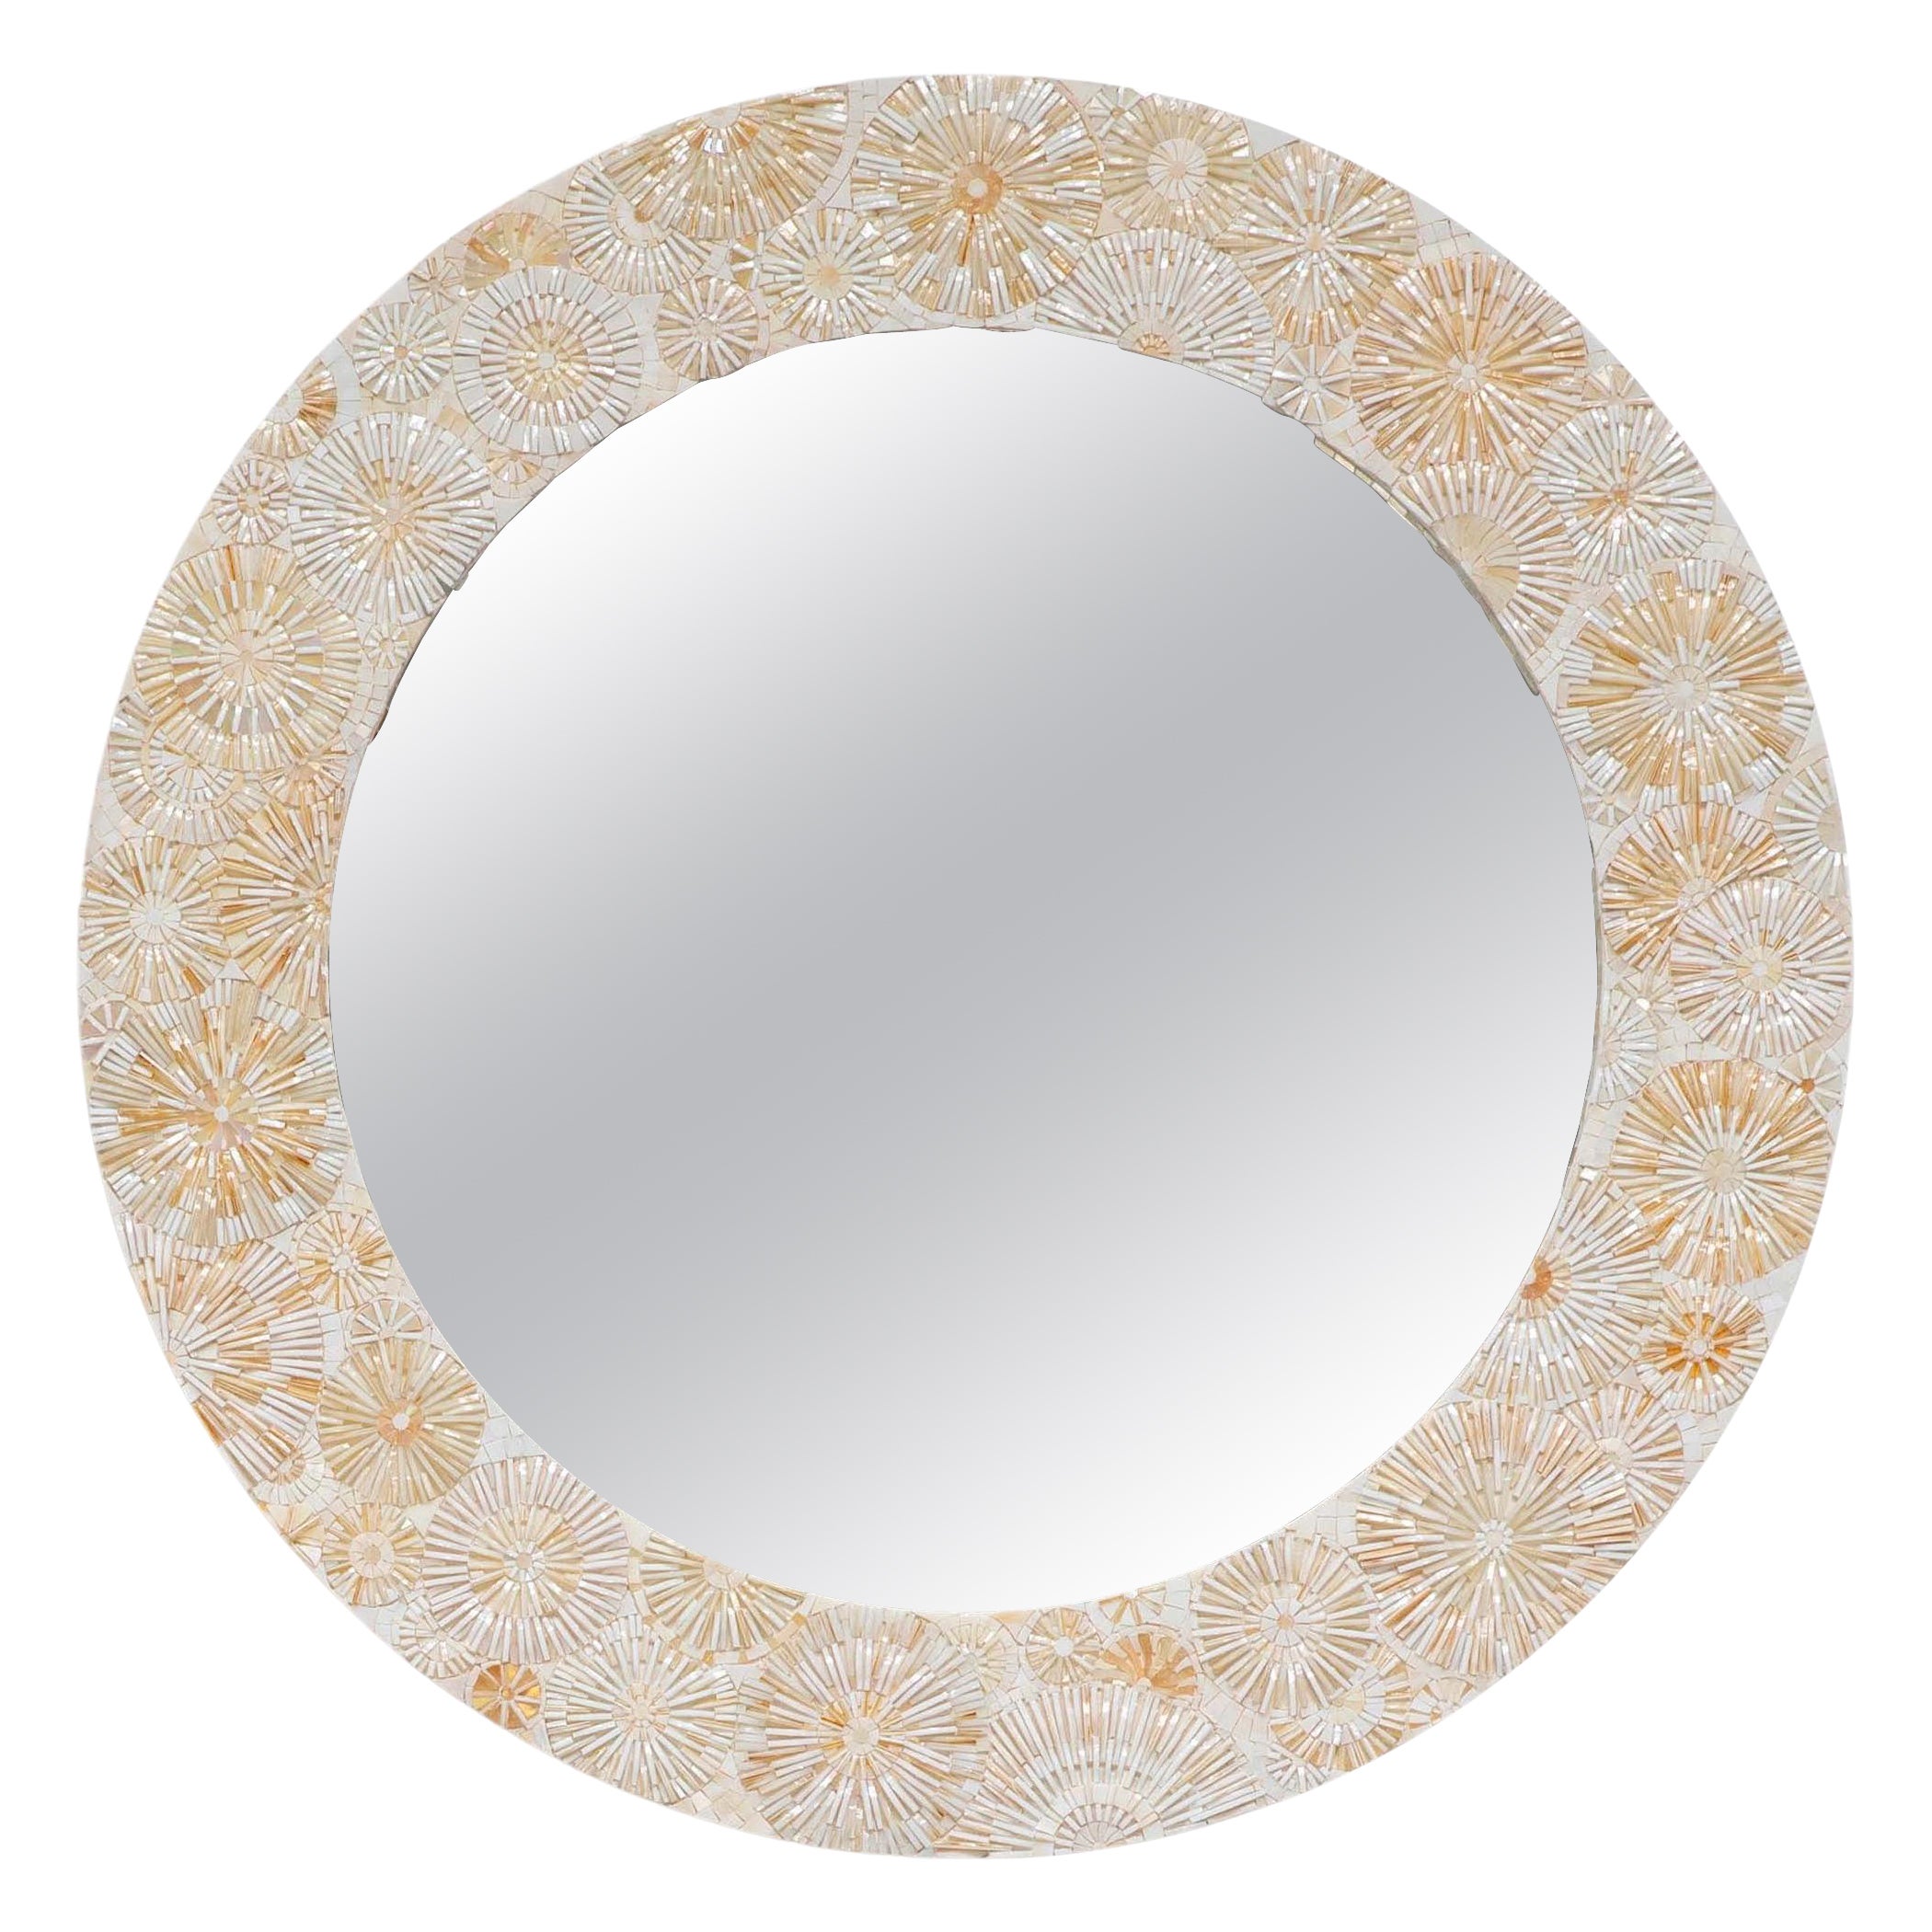 Modern Round Blossom Mosaic Mirror in Warm Ivories by Ercole Home